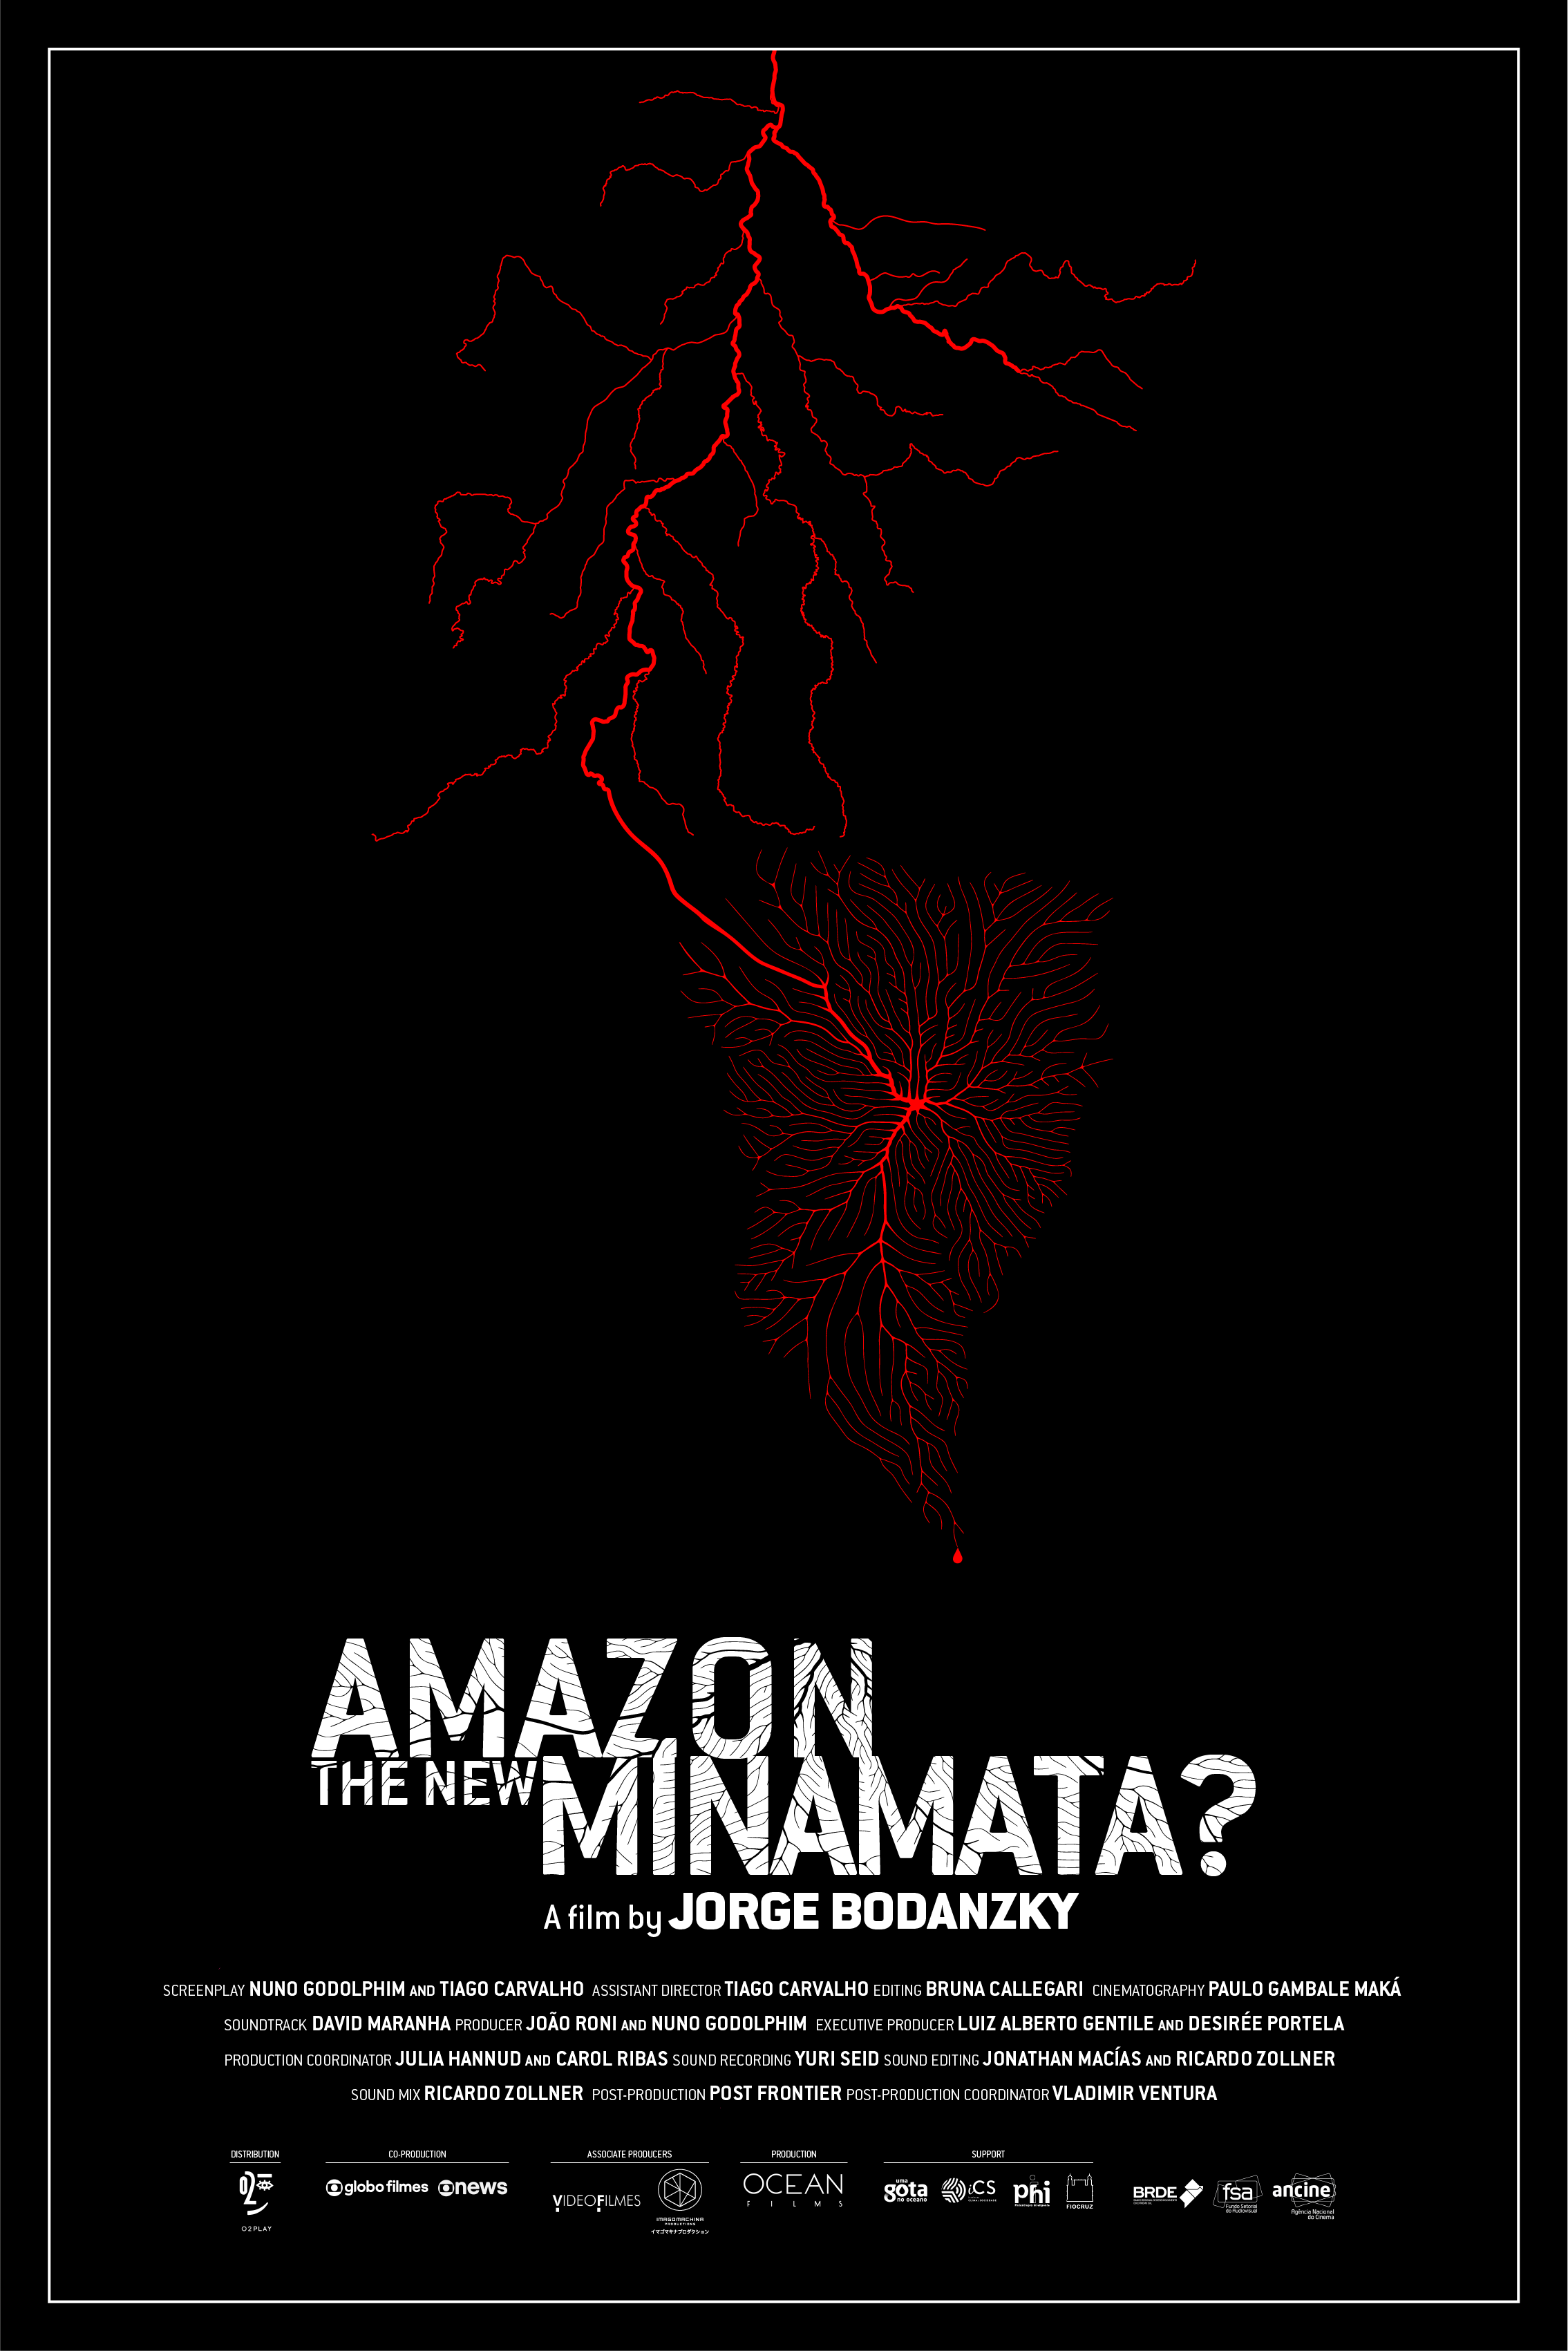 AMAZONIE LA NOUVELLE MINAMATA